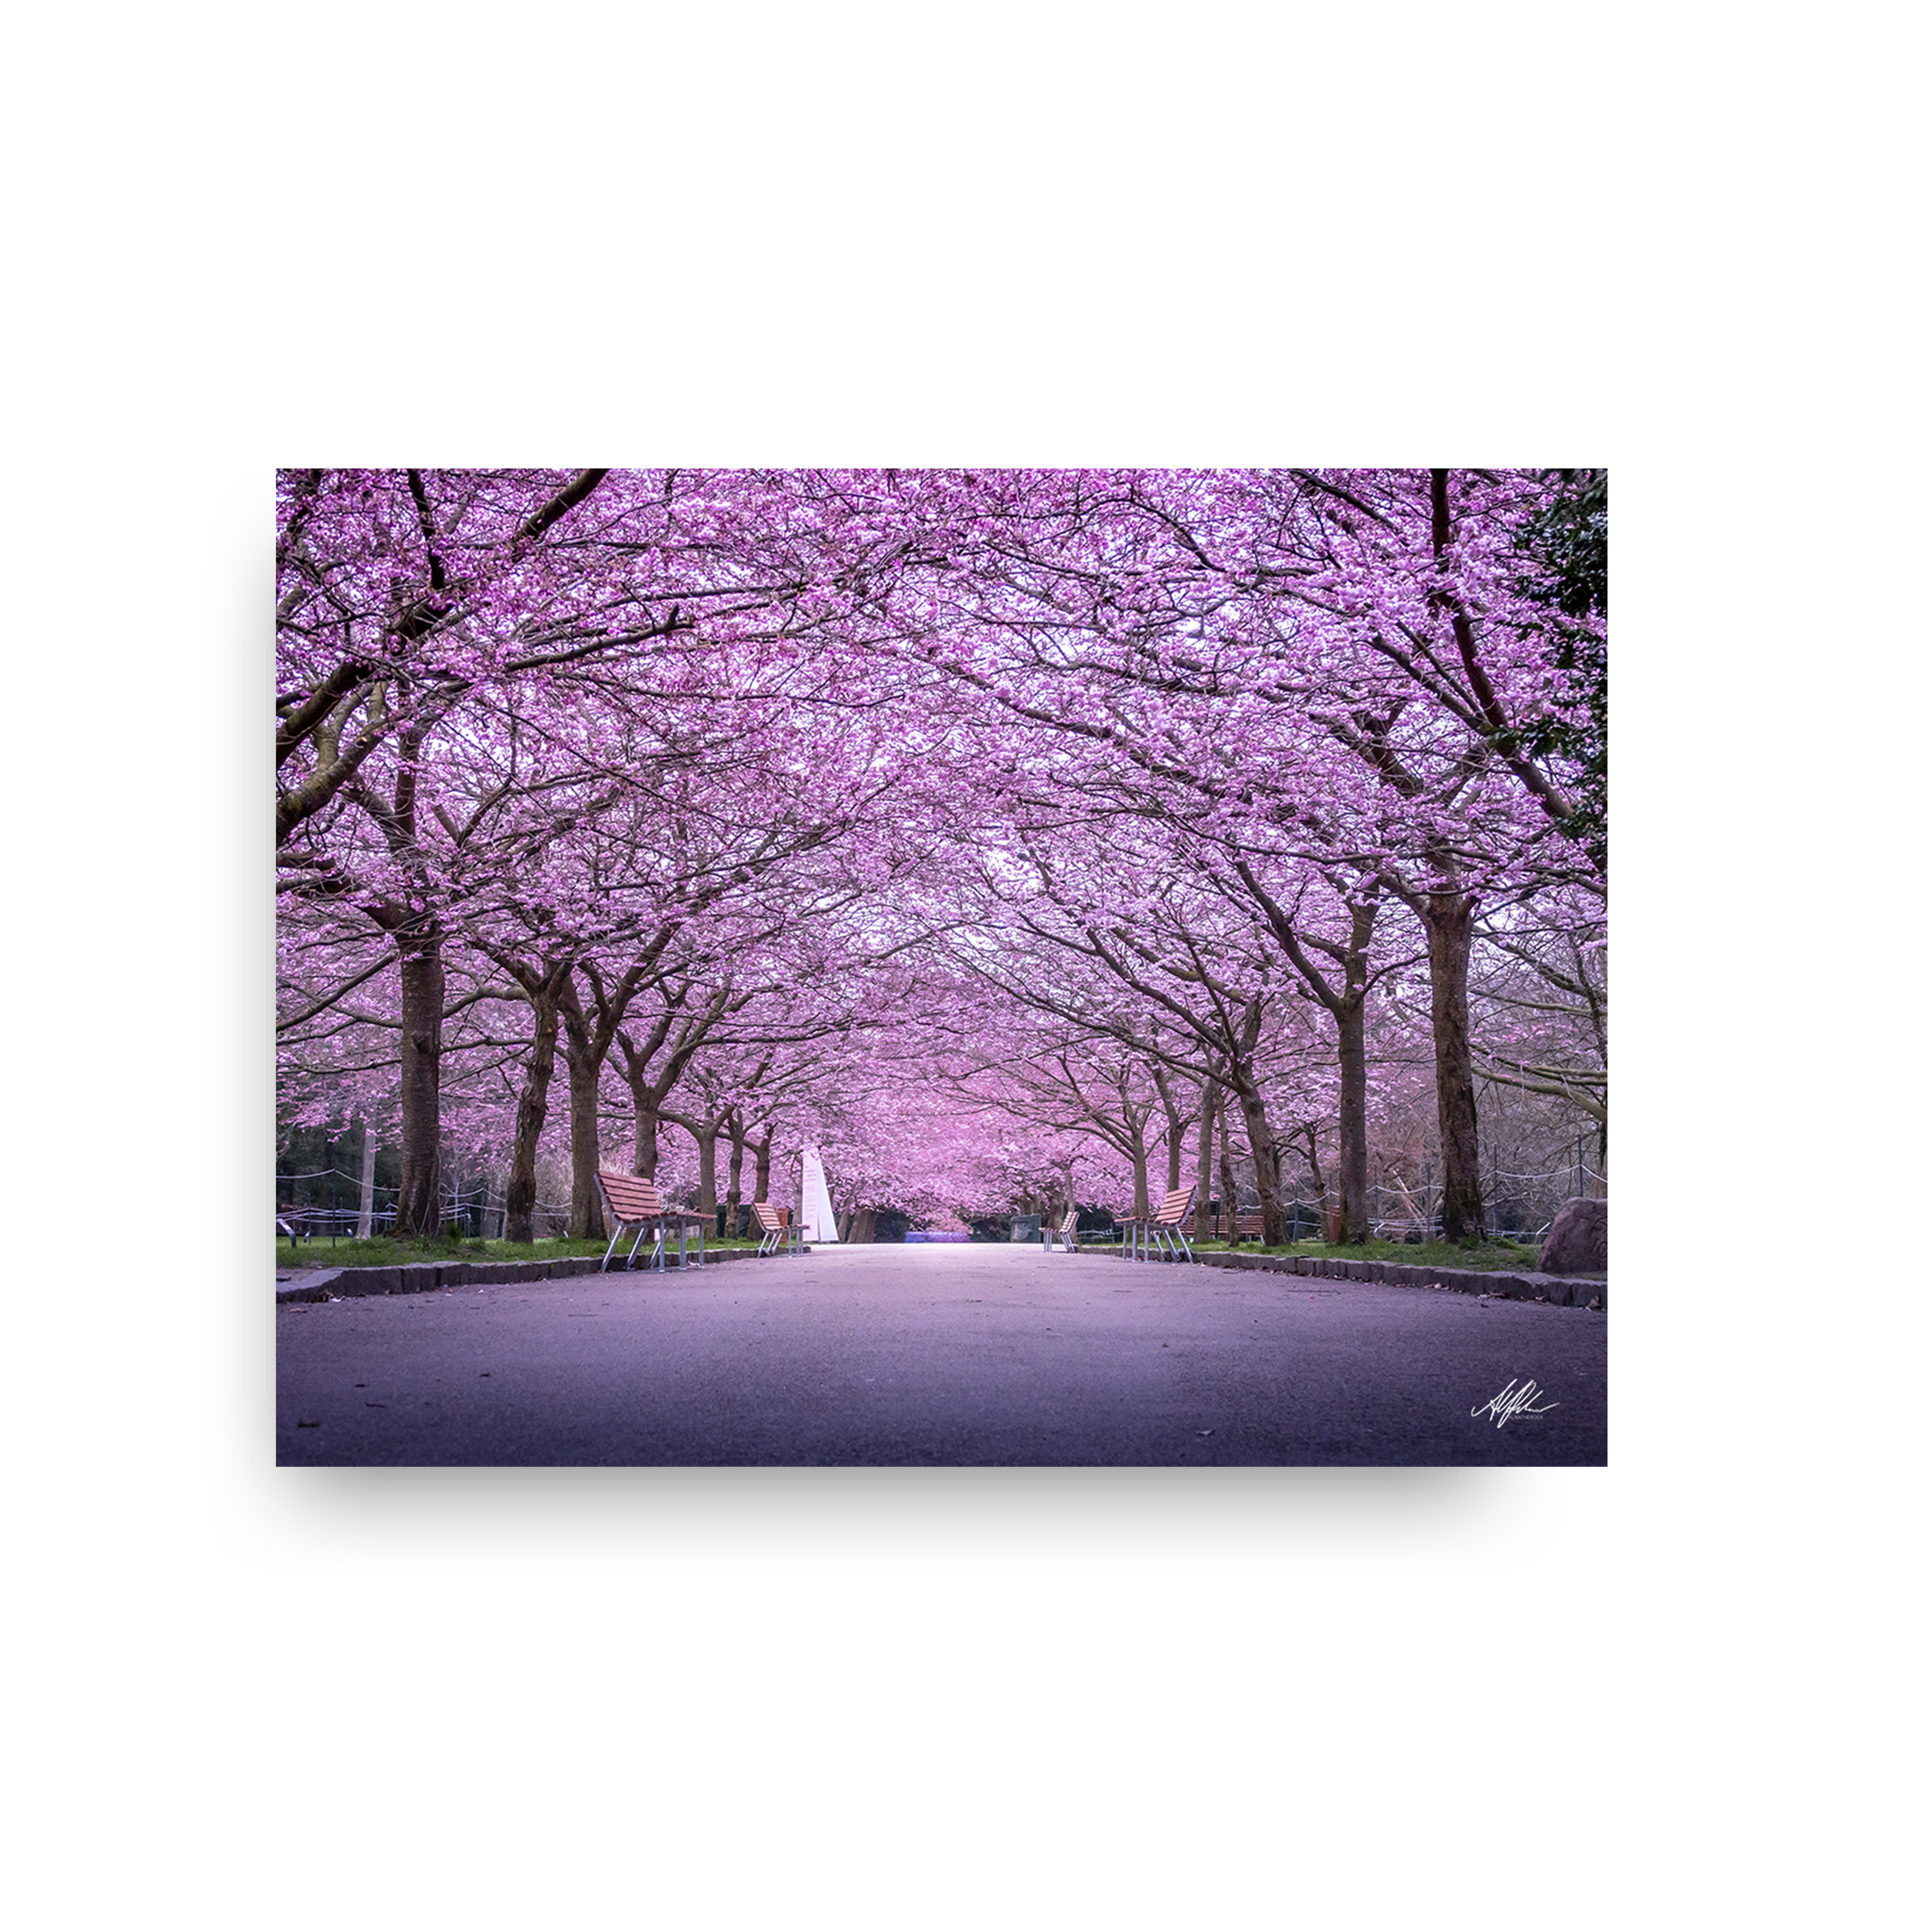 Flor de cerezo - Temporada de Sakura 2019 - Alantherock